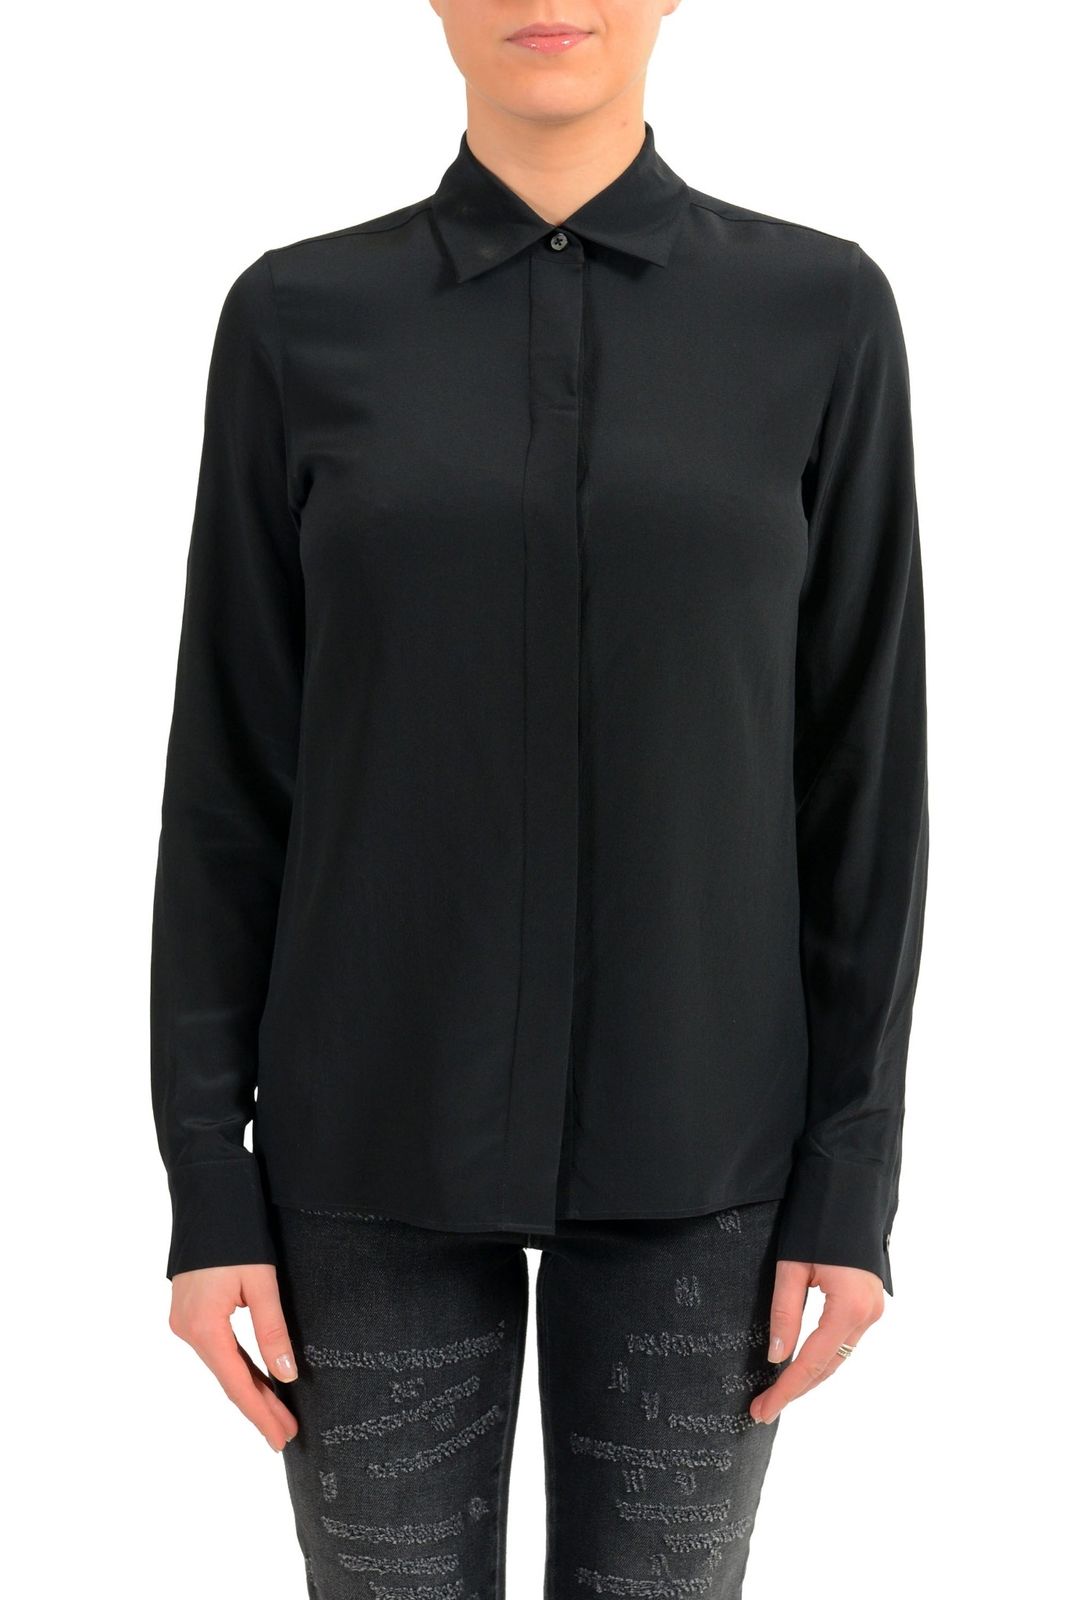 Maison Margiela 4 Women's 100% Silk Black Button Up Blouse Top sold by ONE MODA | Rakuten.com/shop/